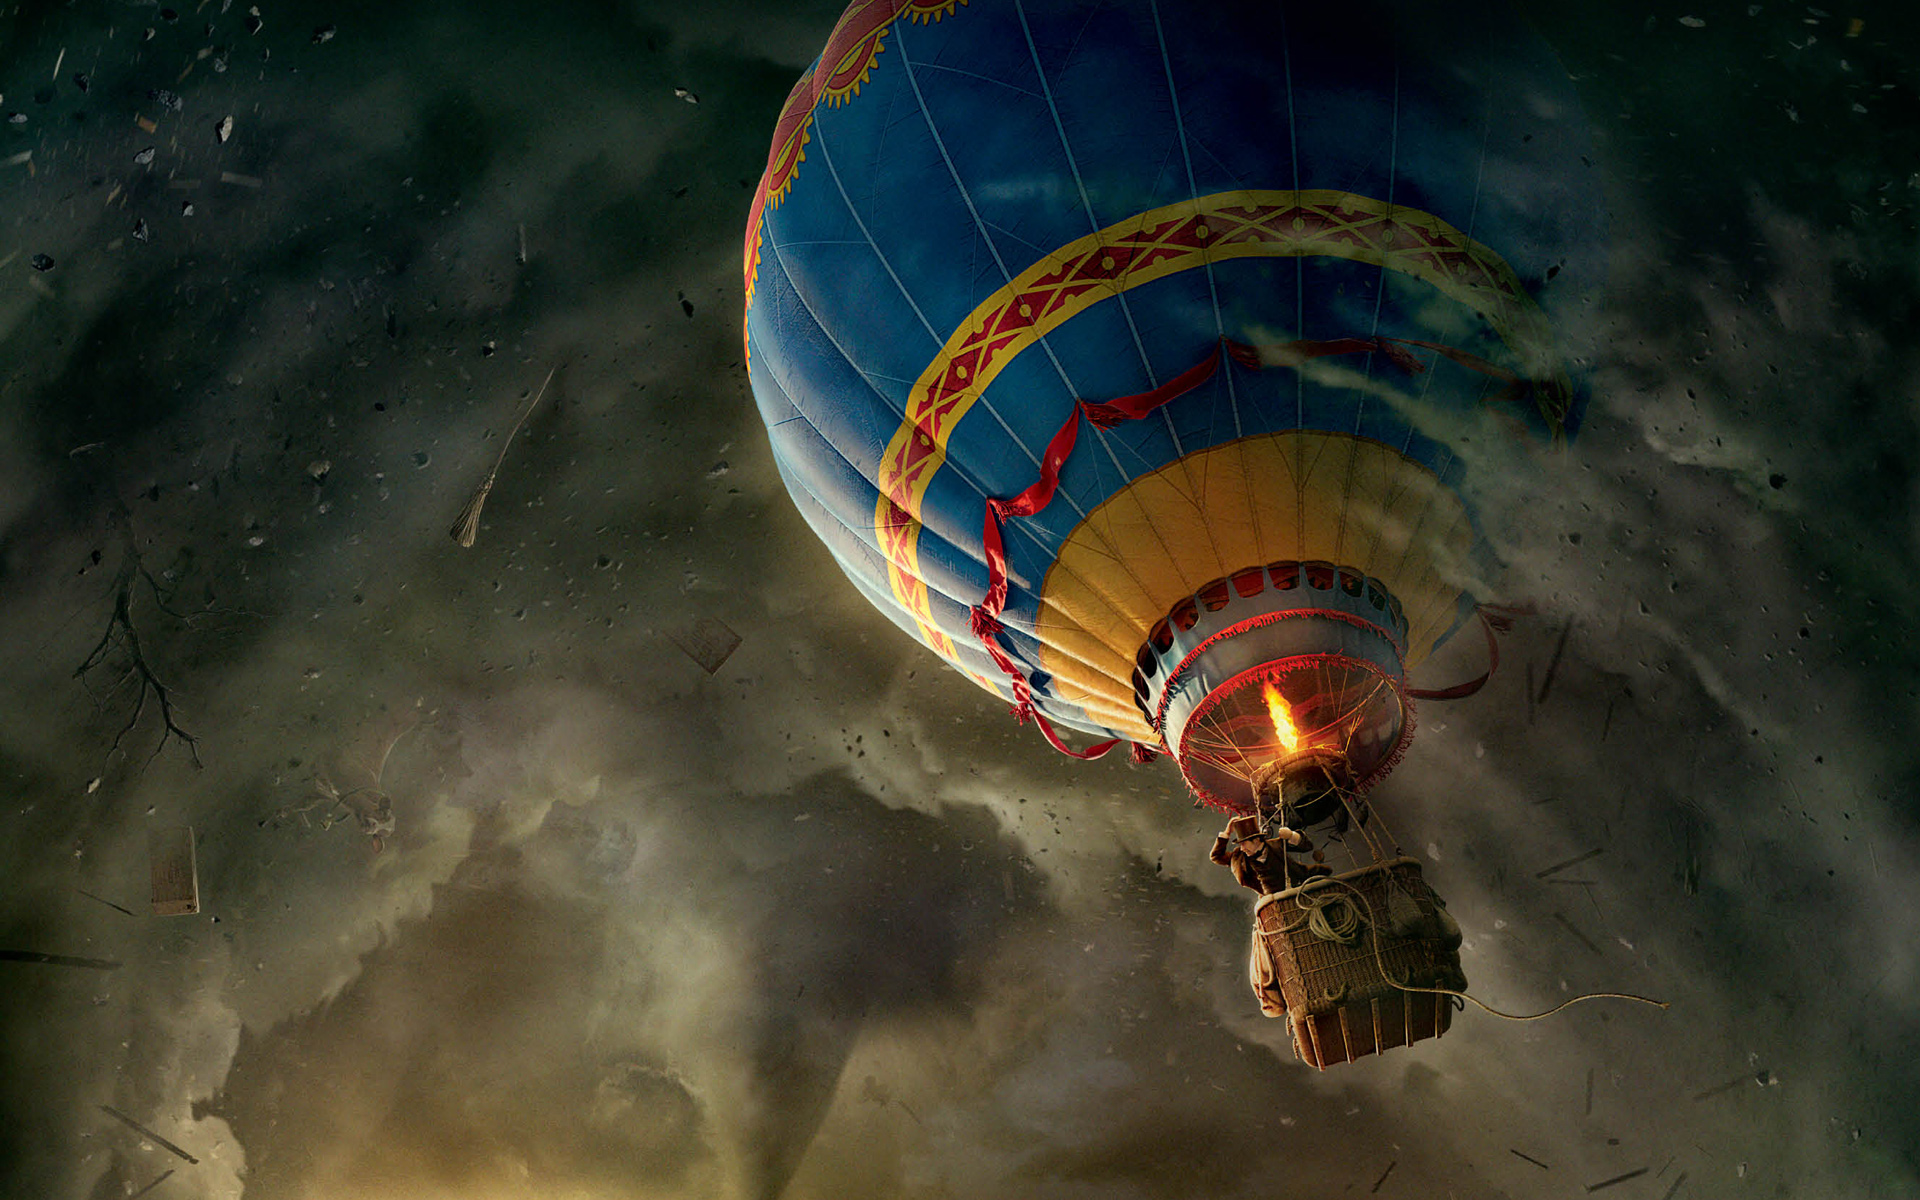 oz wallpaper,hot air ballooning,hot air balloon,atmosphere,vehicle,space